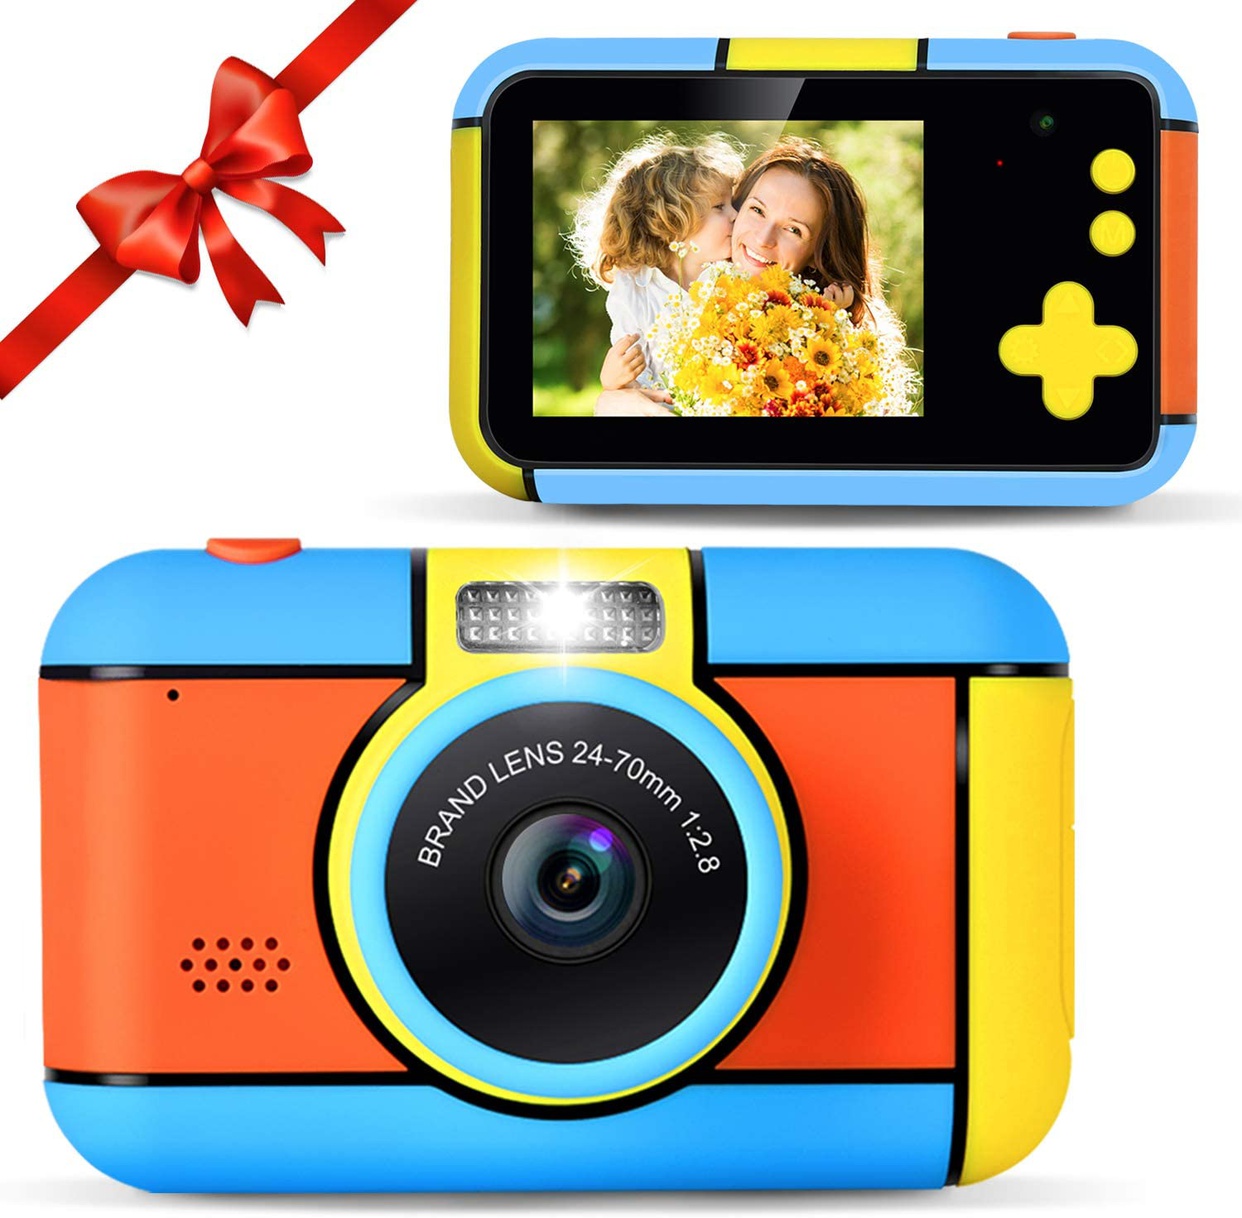 WisFox(ウィスフォックス) 子供用デジタルカメラの商品画像1 